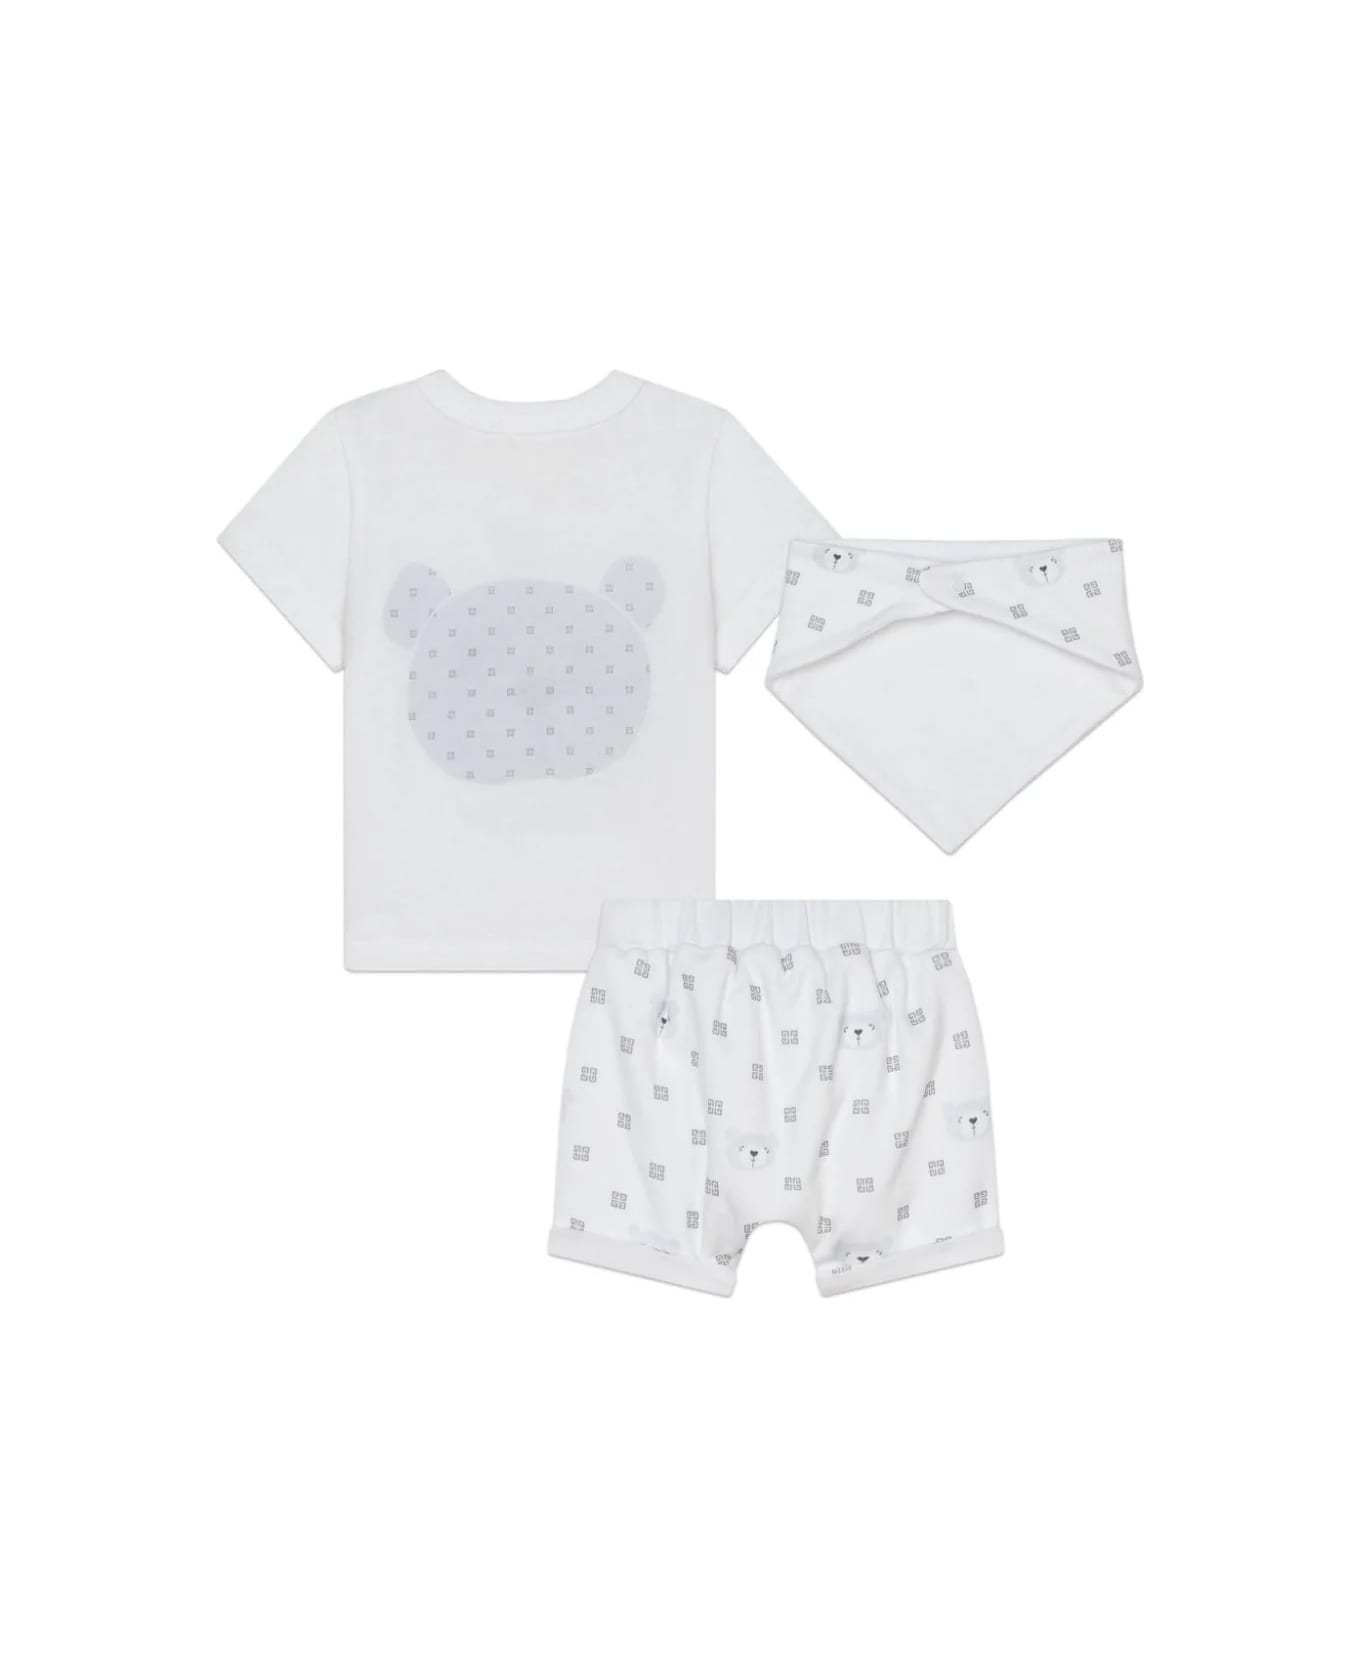 Givenchy Set With Printed Cotton T-shirt, Shorts And Bandana - White